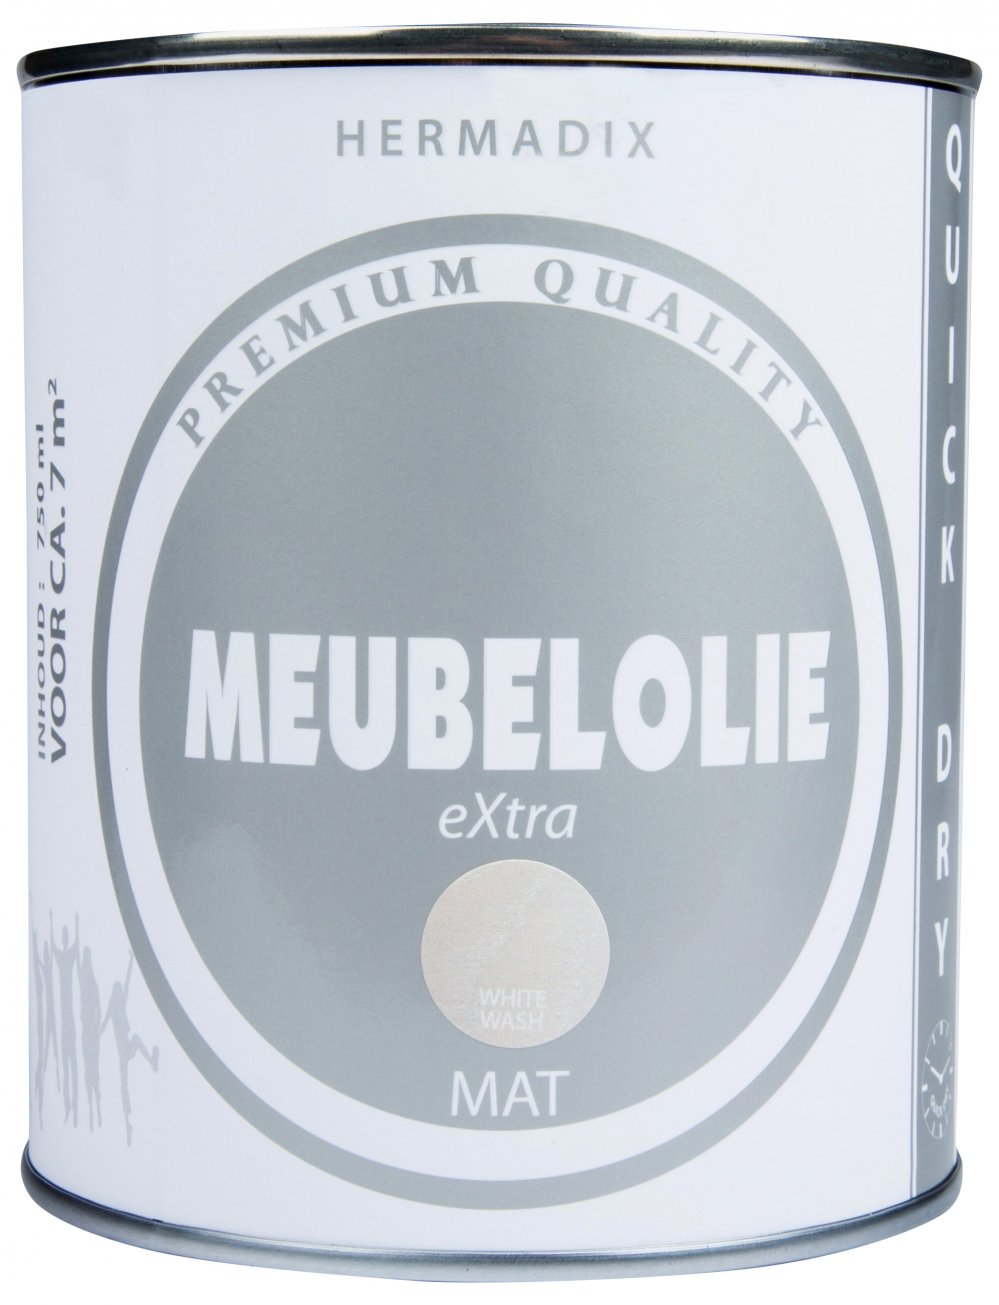 Hermadix - hermadix-meubellolie-extra-mat-white-wash-verfcompleet.nl